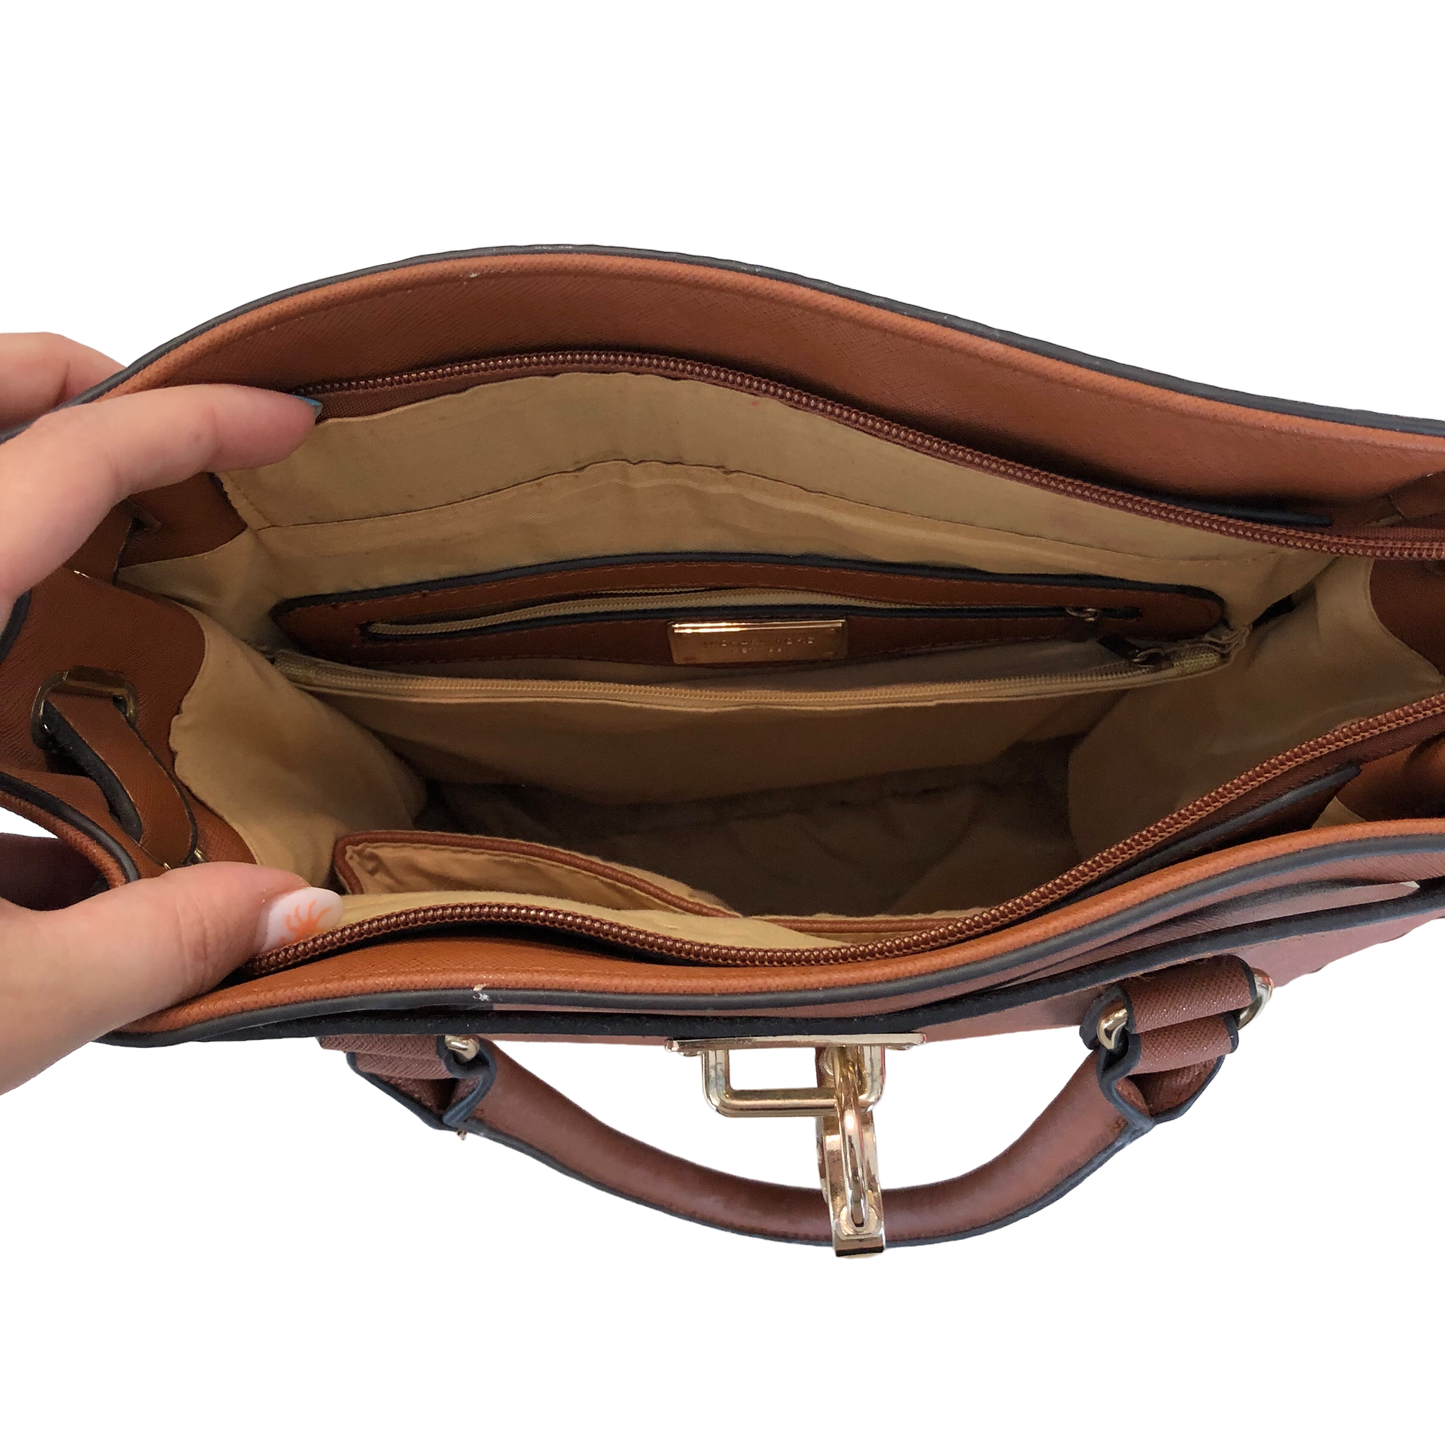 Handbag Michael Kors, Size Medium